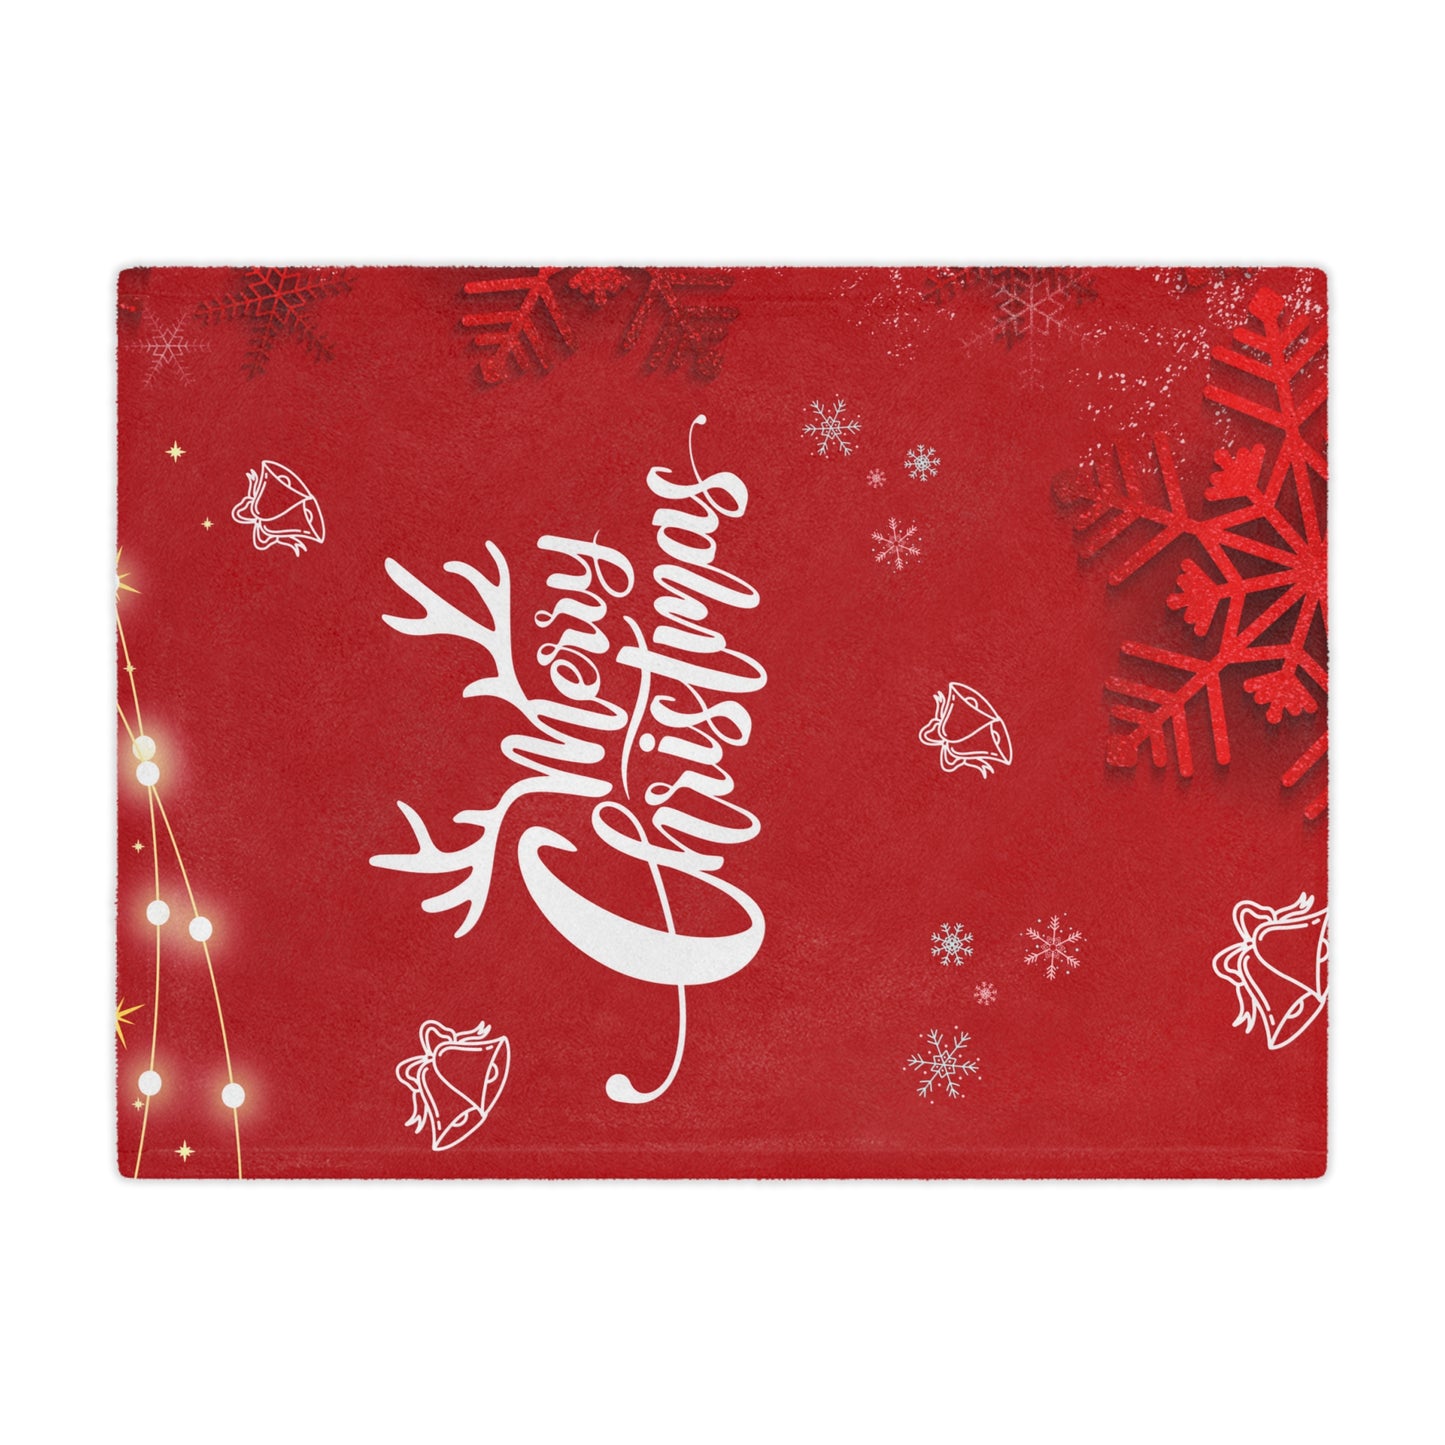 Merry Christmas in Red Printed Minky Blanket